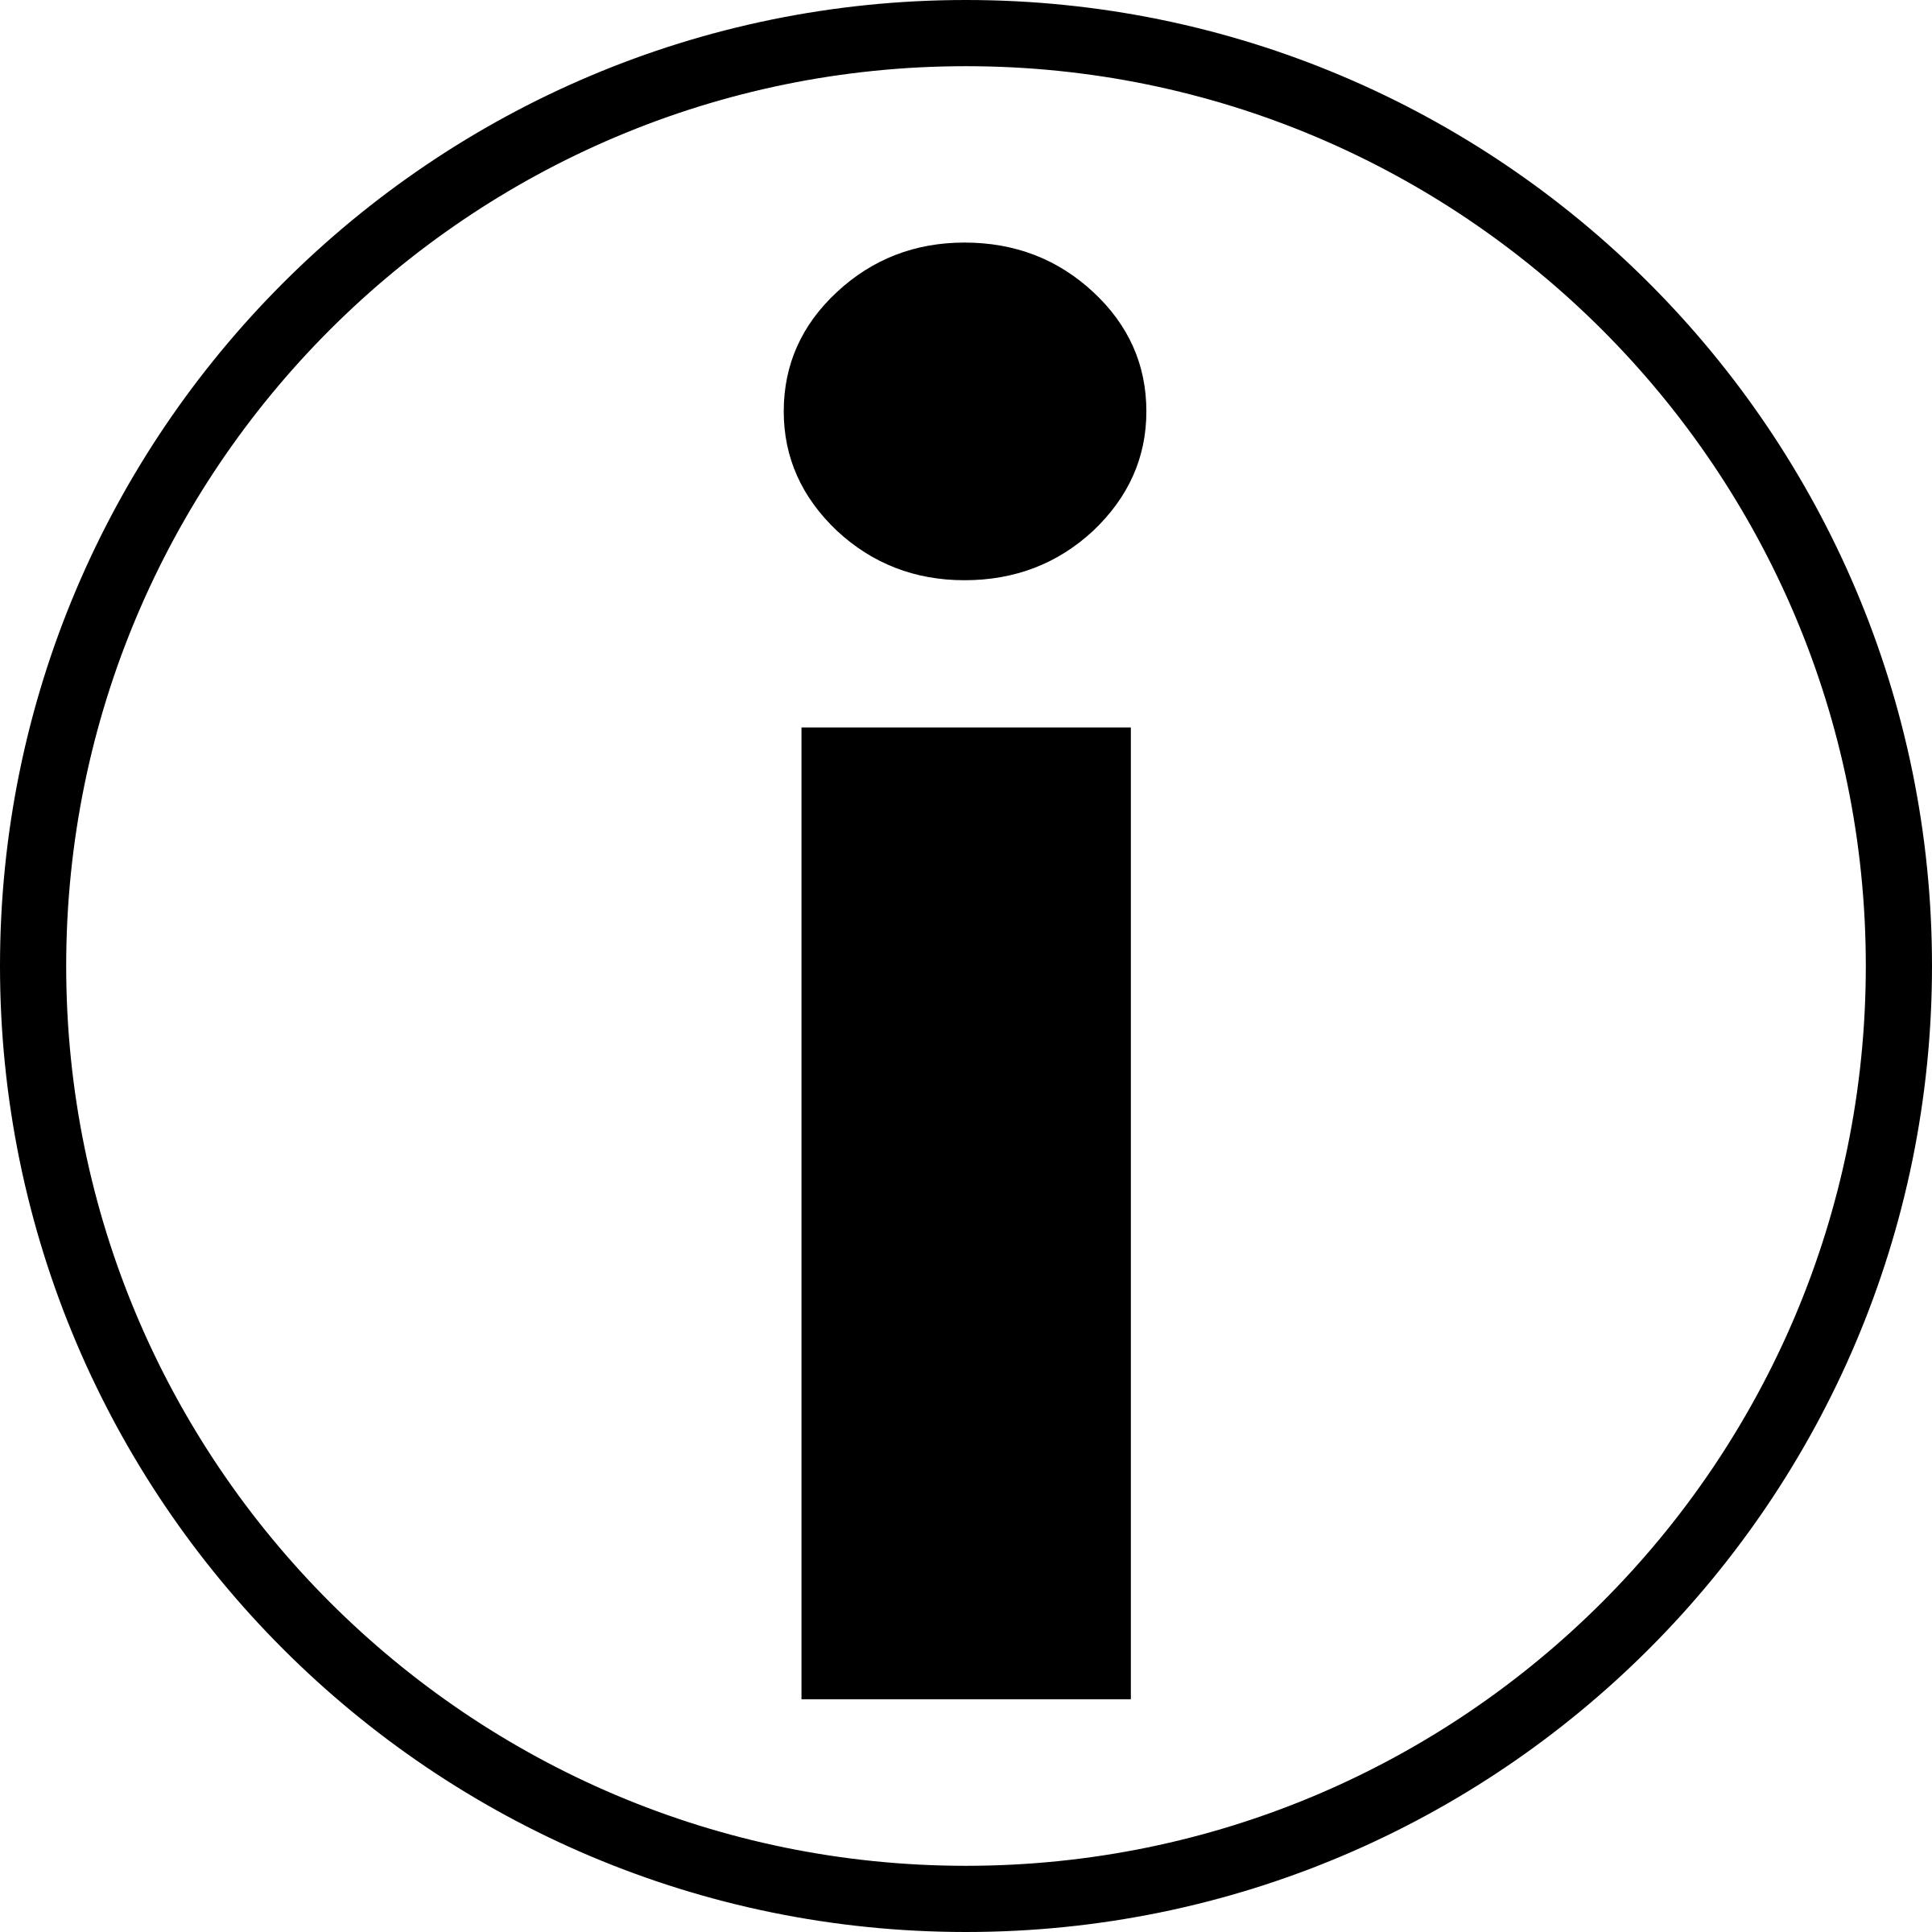 Universal information symbol png